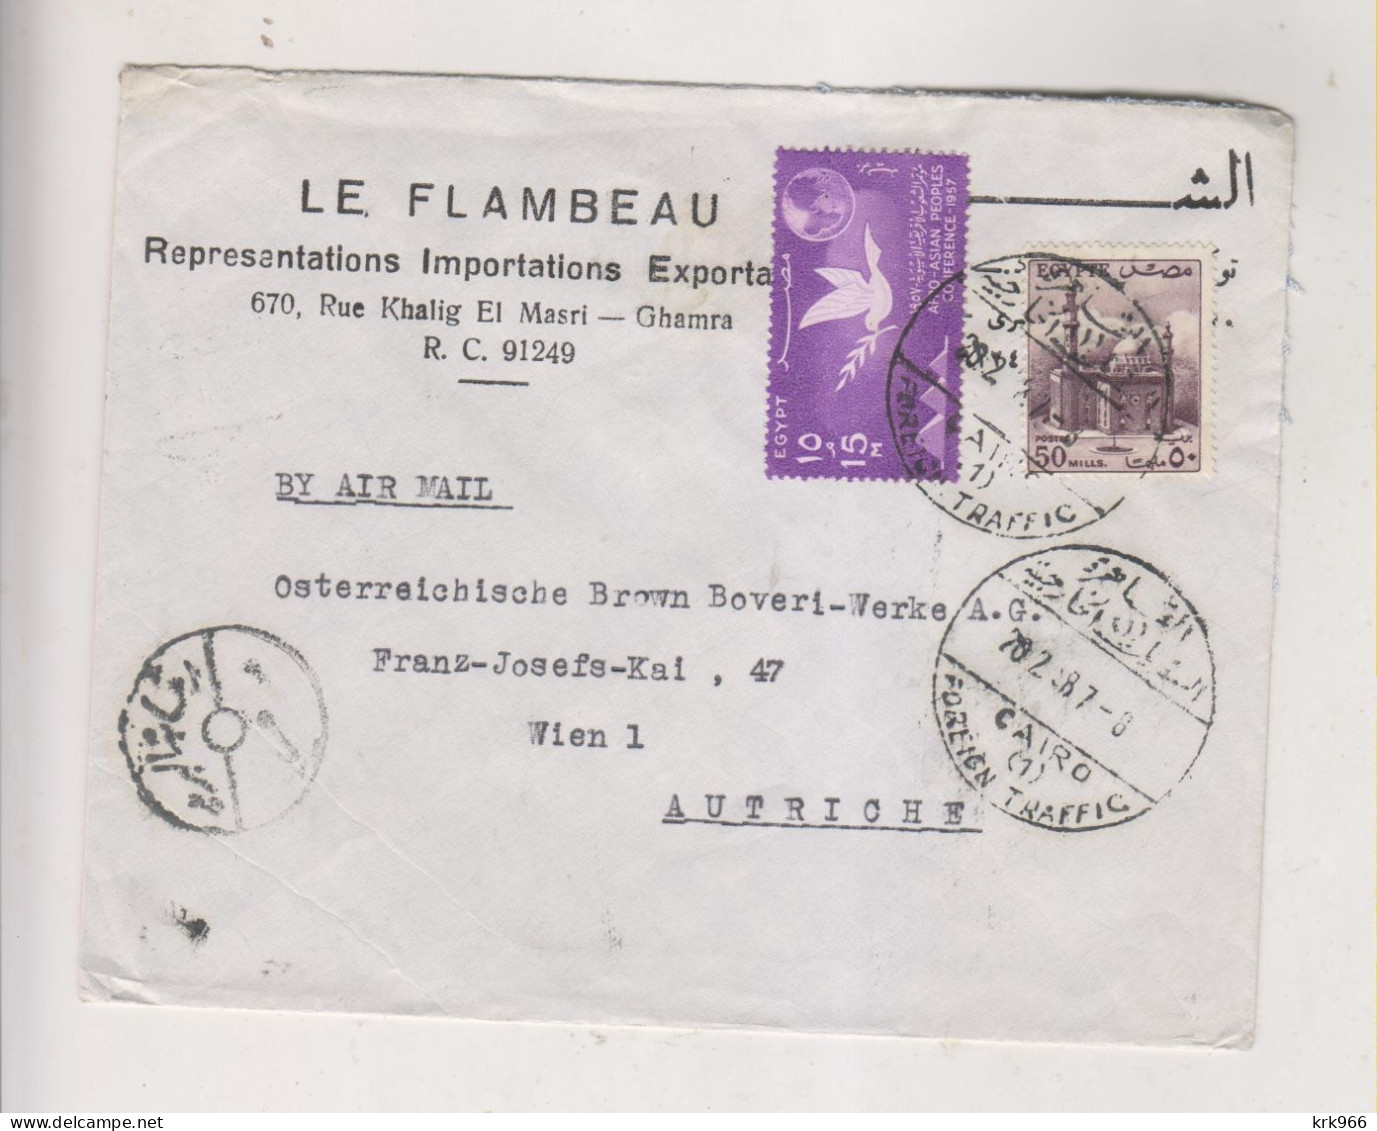 EGYPT CAIRO 1958  Airmail Cover To Austria - Luftpost